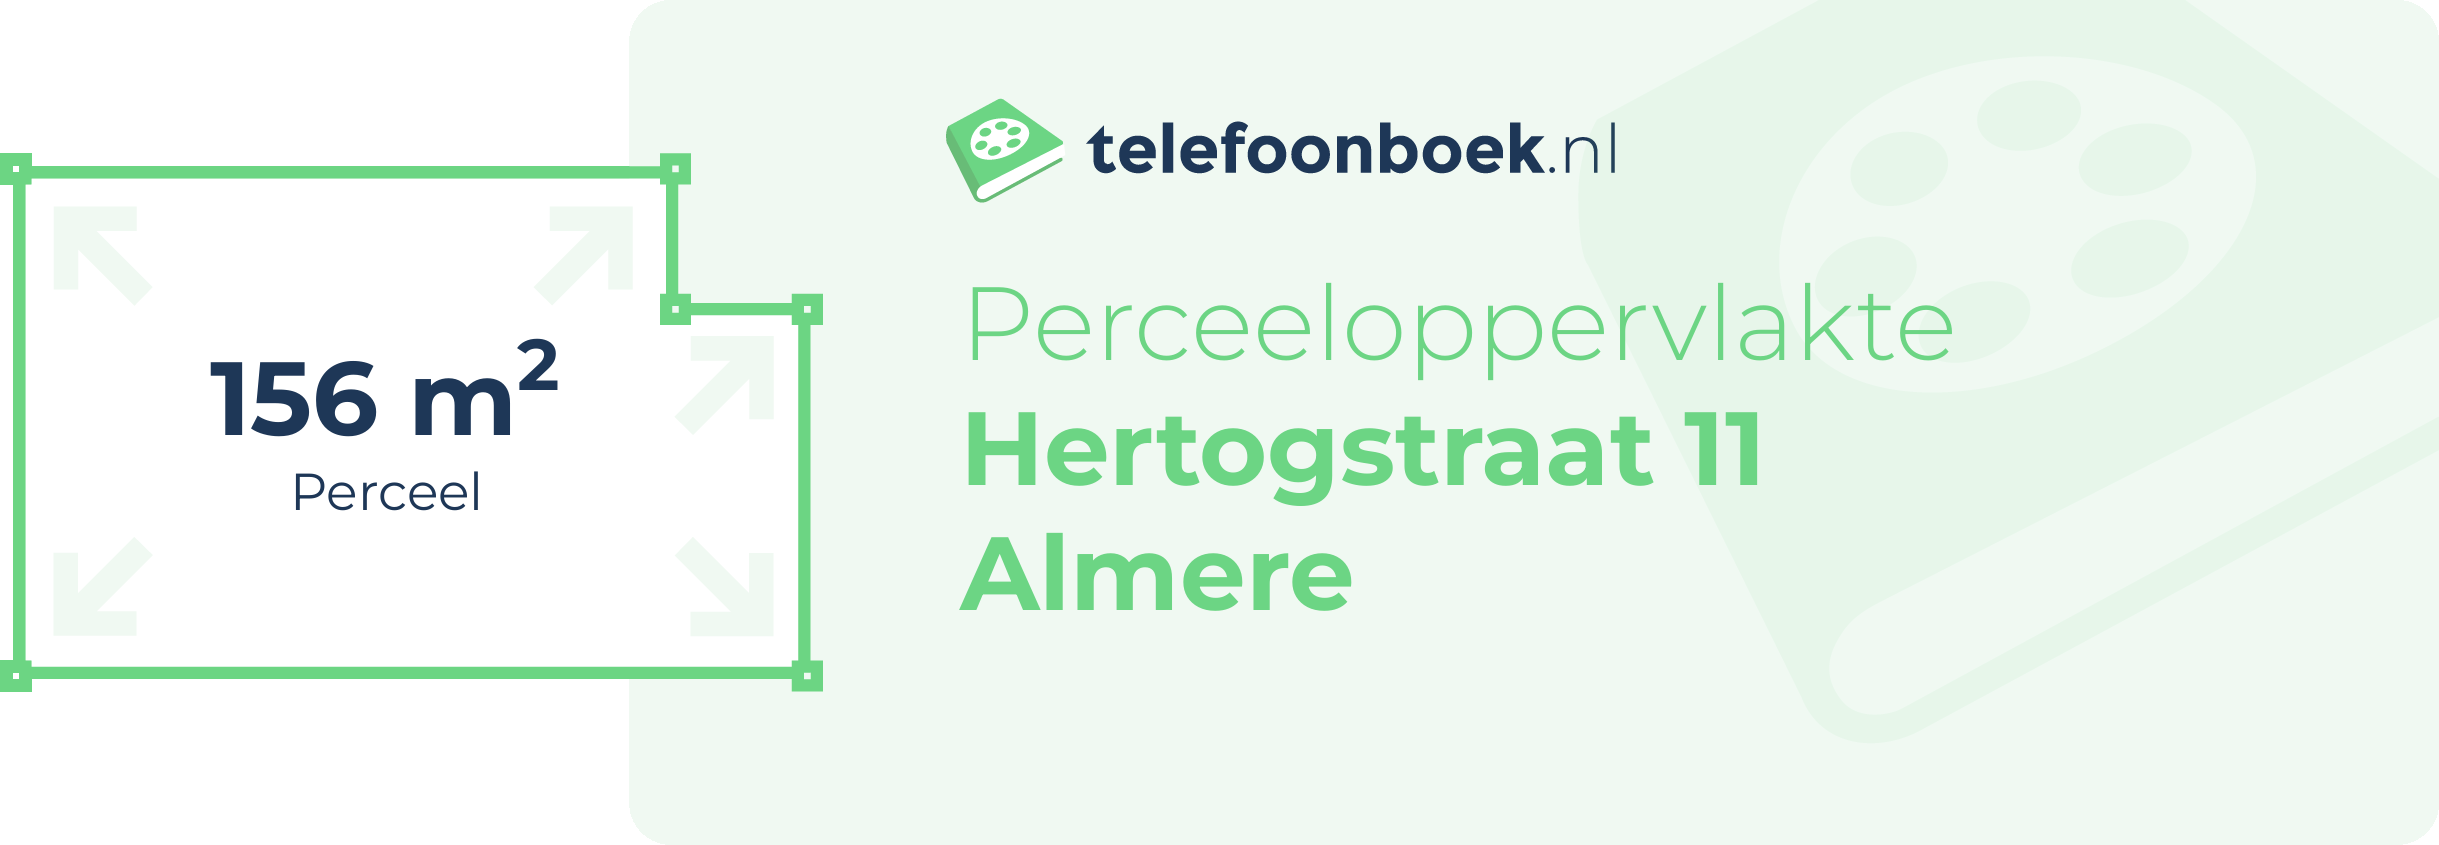 Perceeloppervlakte Hertogstraat 11 Almere